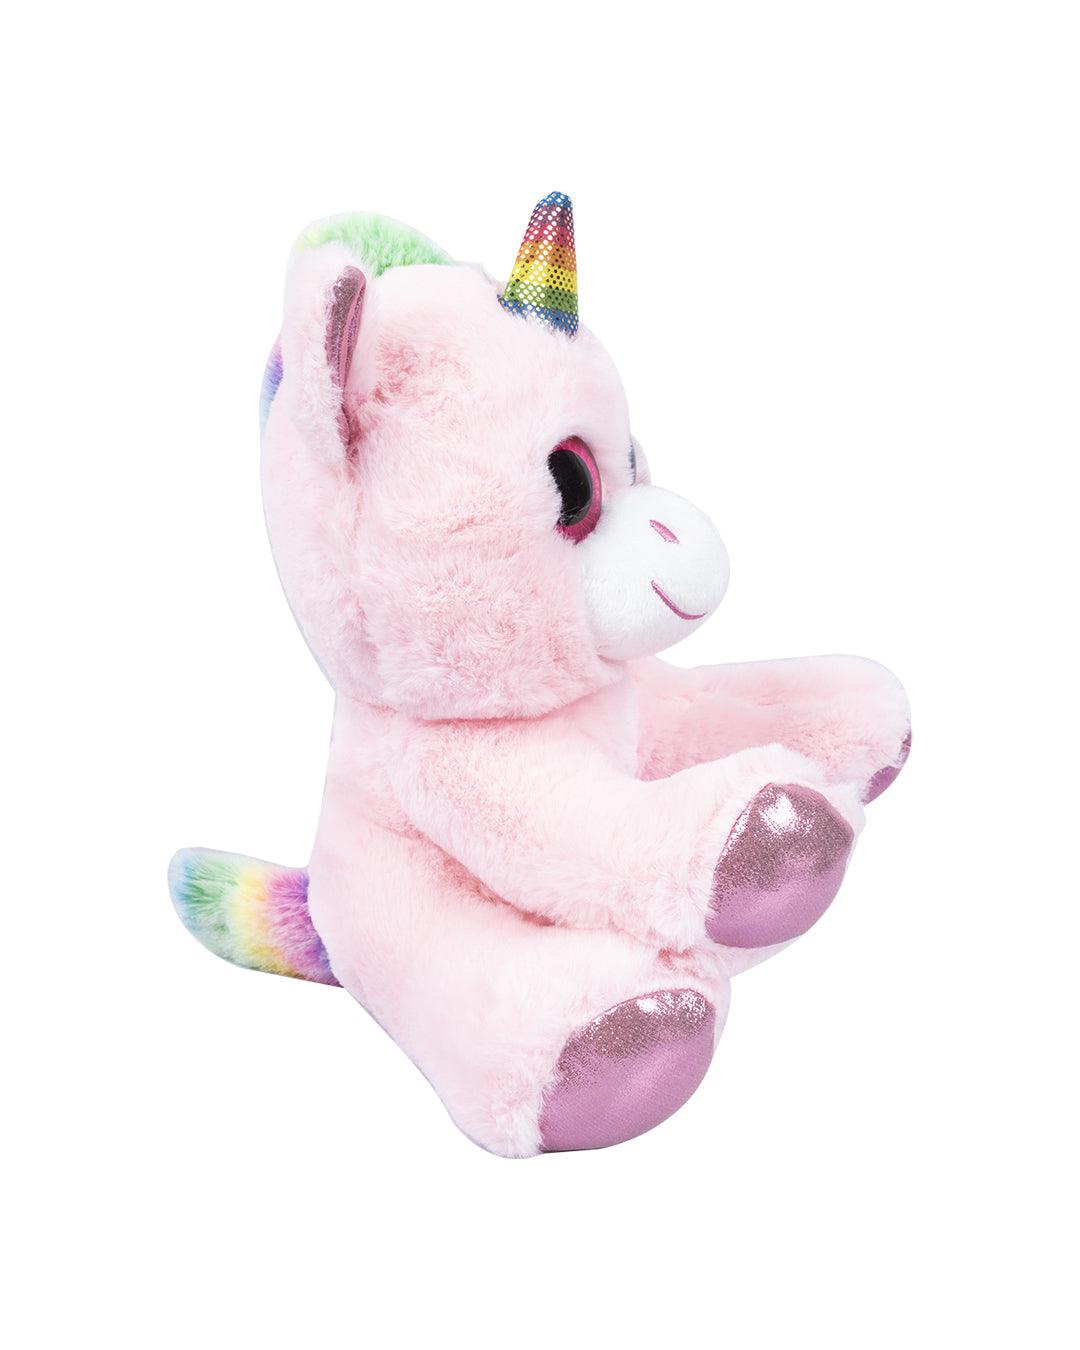 DIMPLY STUFF Unicorn Standing Stuffed Animal (23cm, Pink Shade) - Plush Toy - MARKET 99